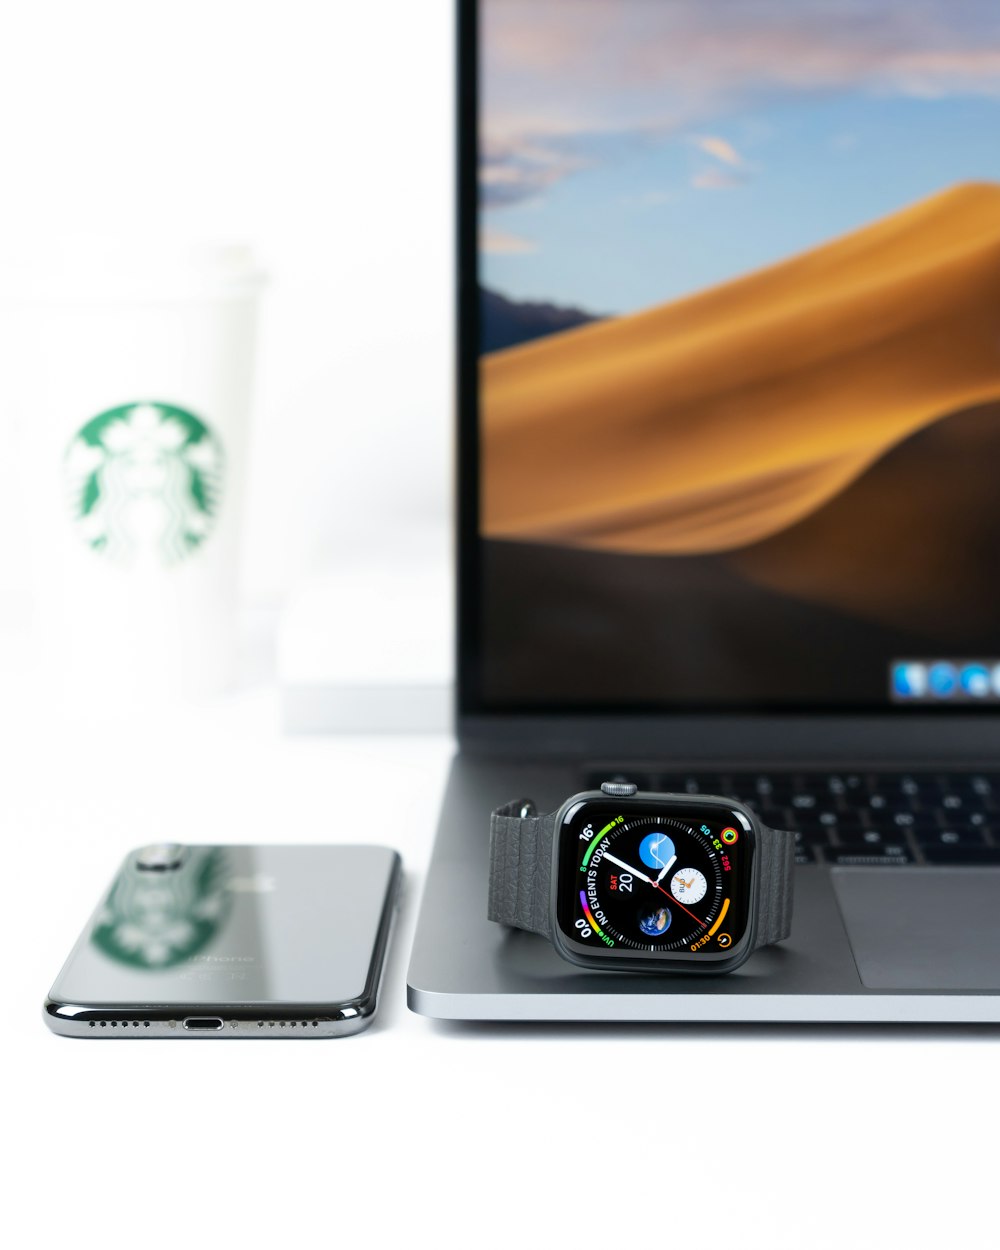 Apple Watch on laptpo